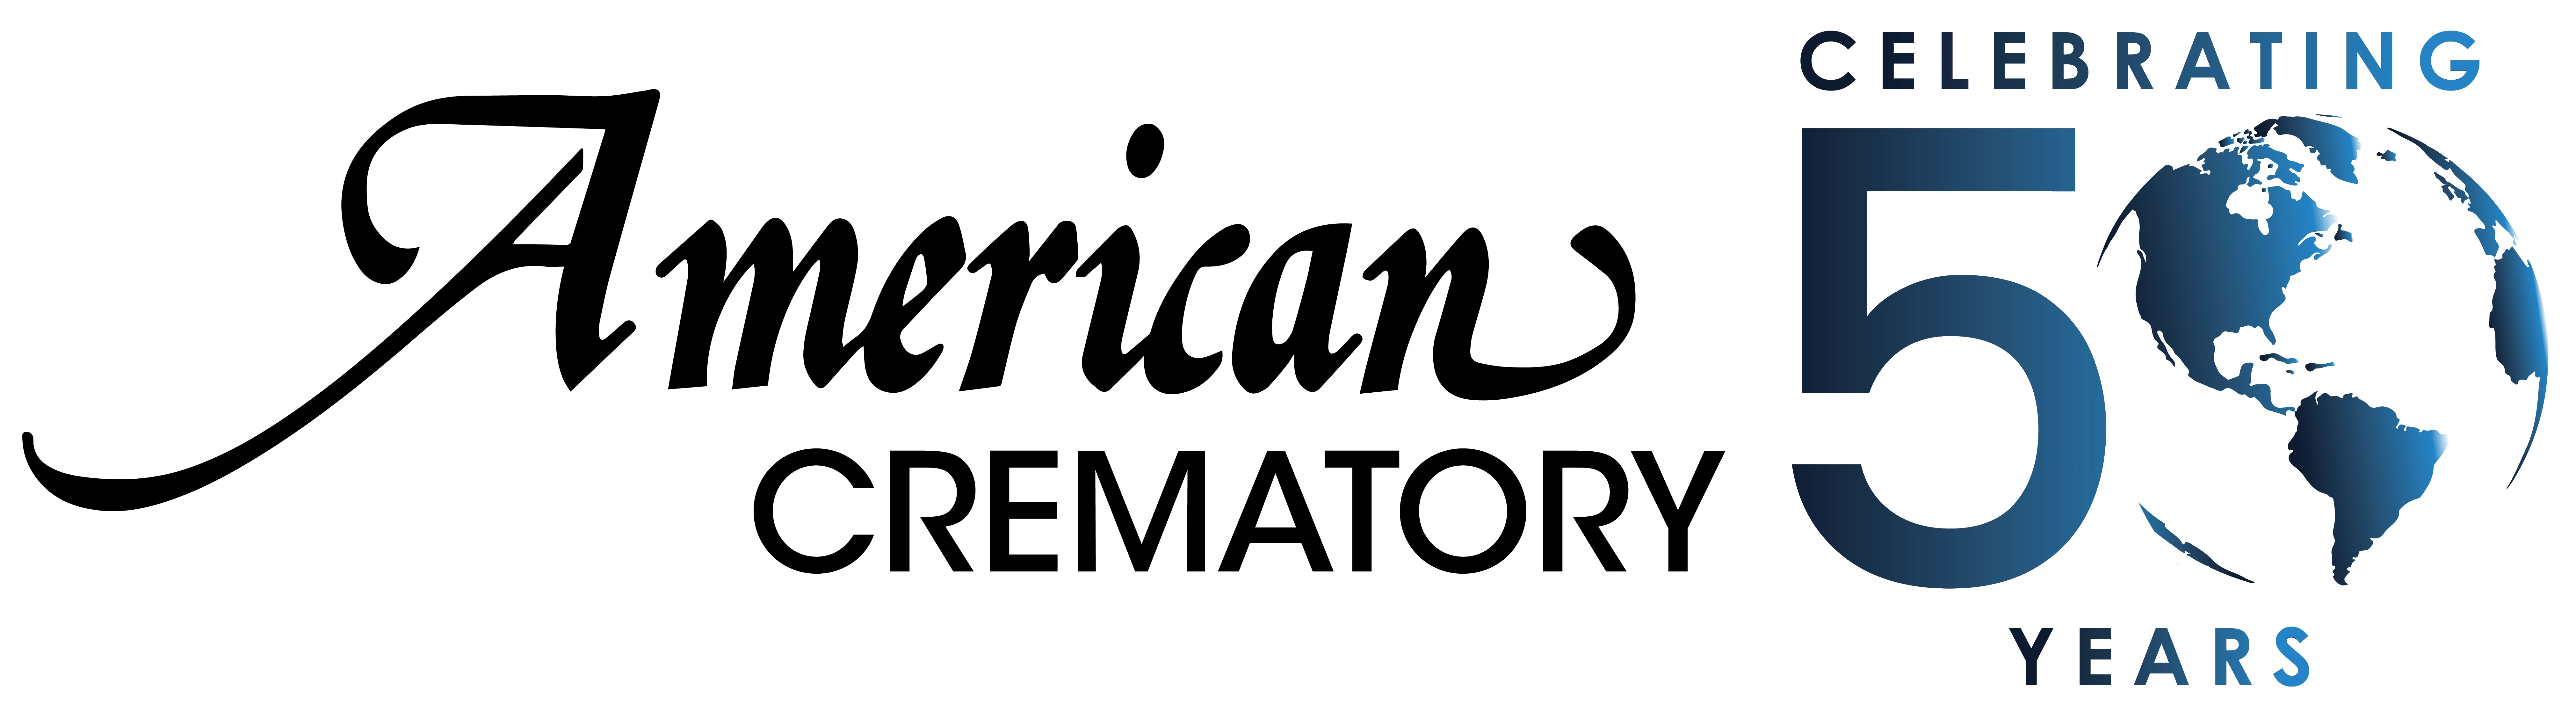 American Crematory Equipment Co